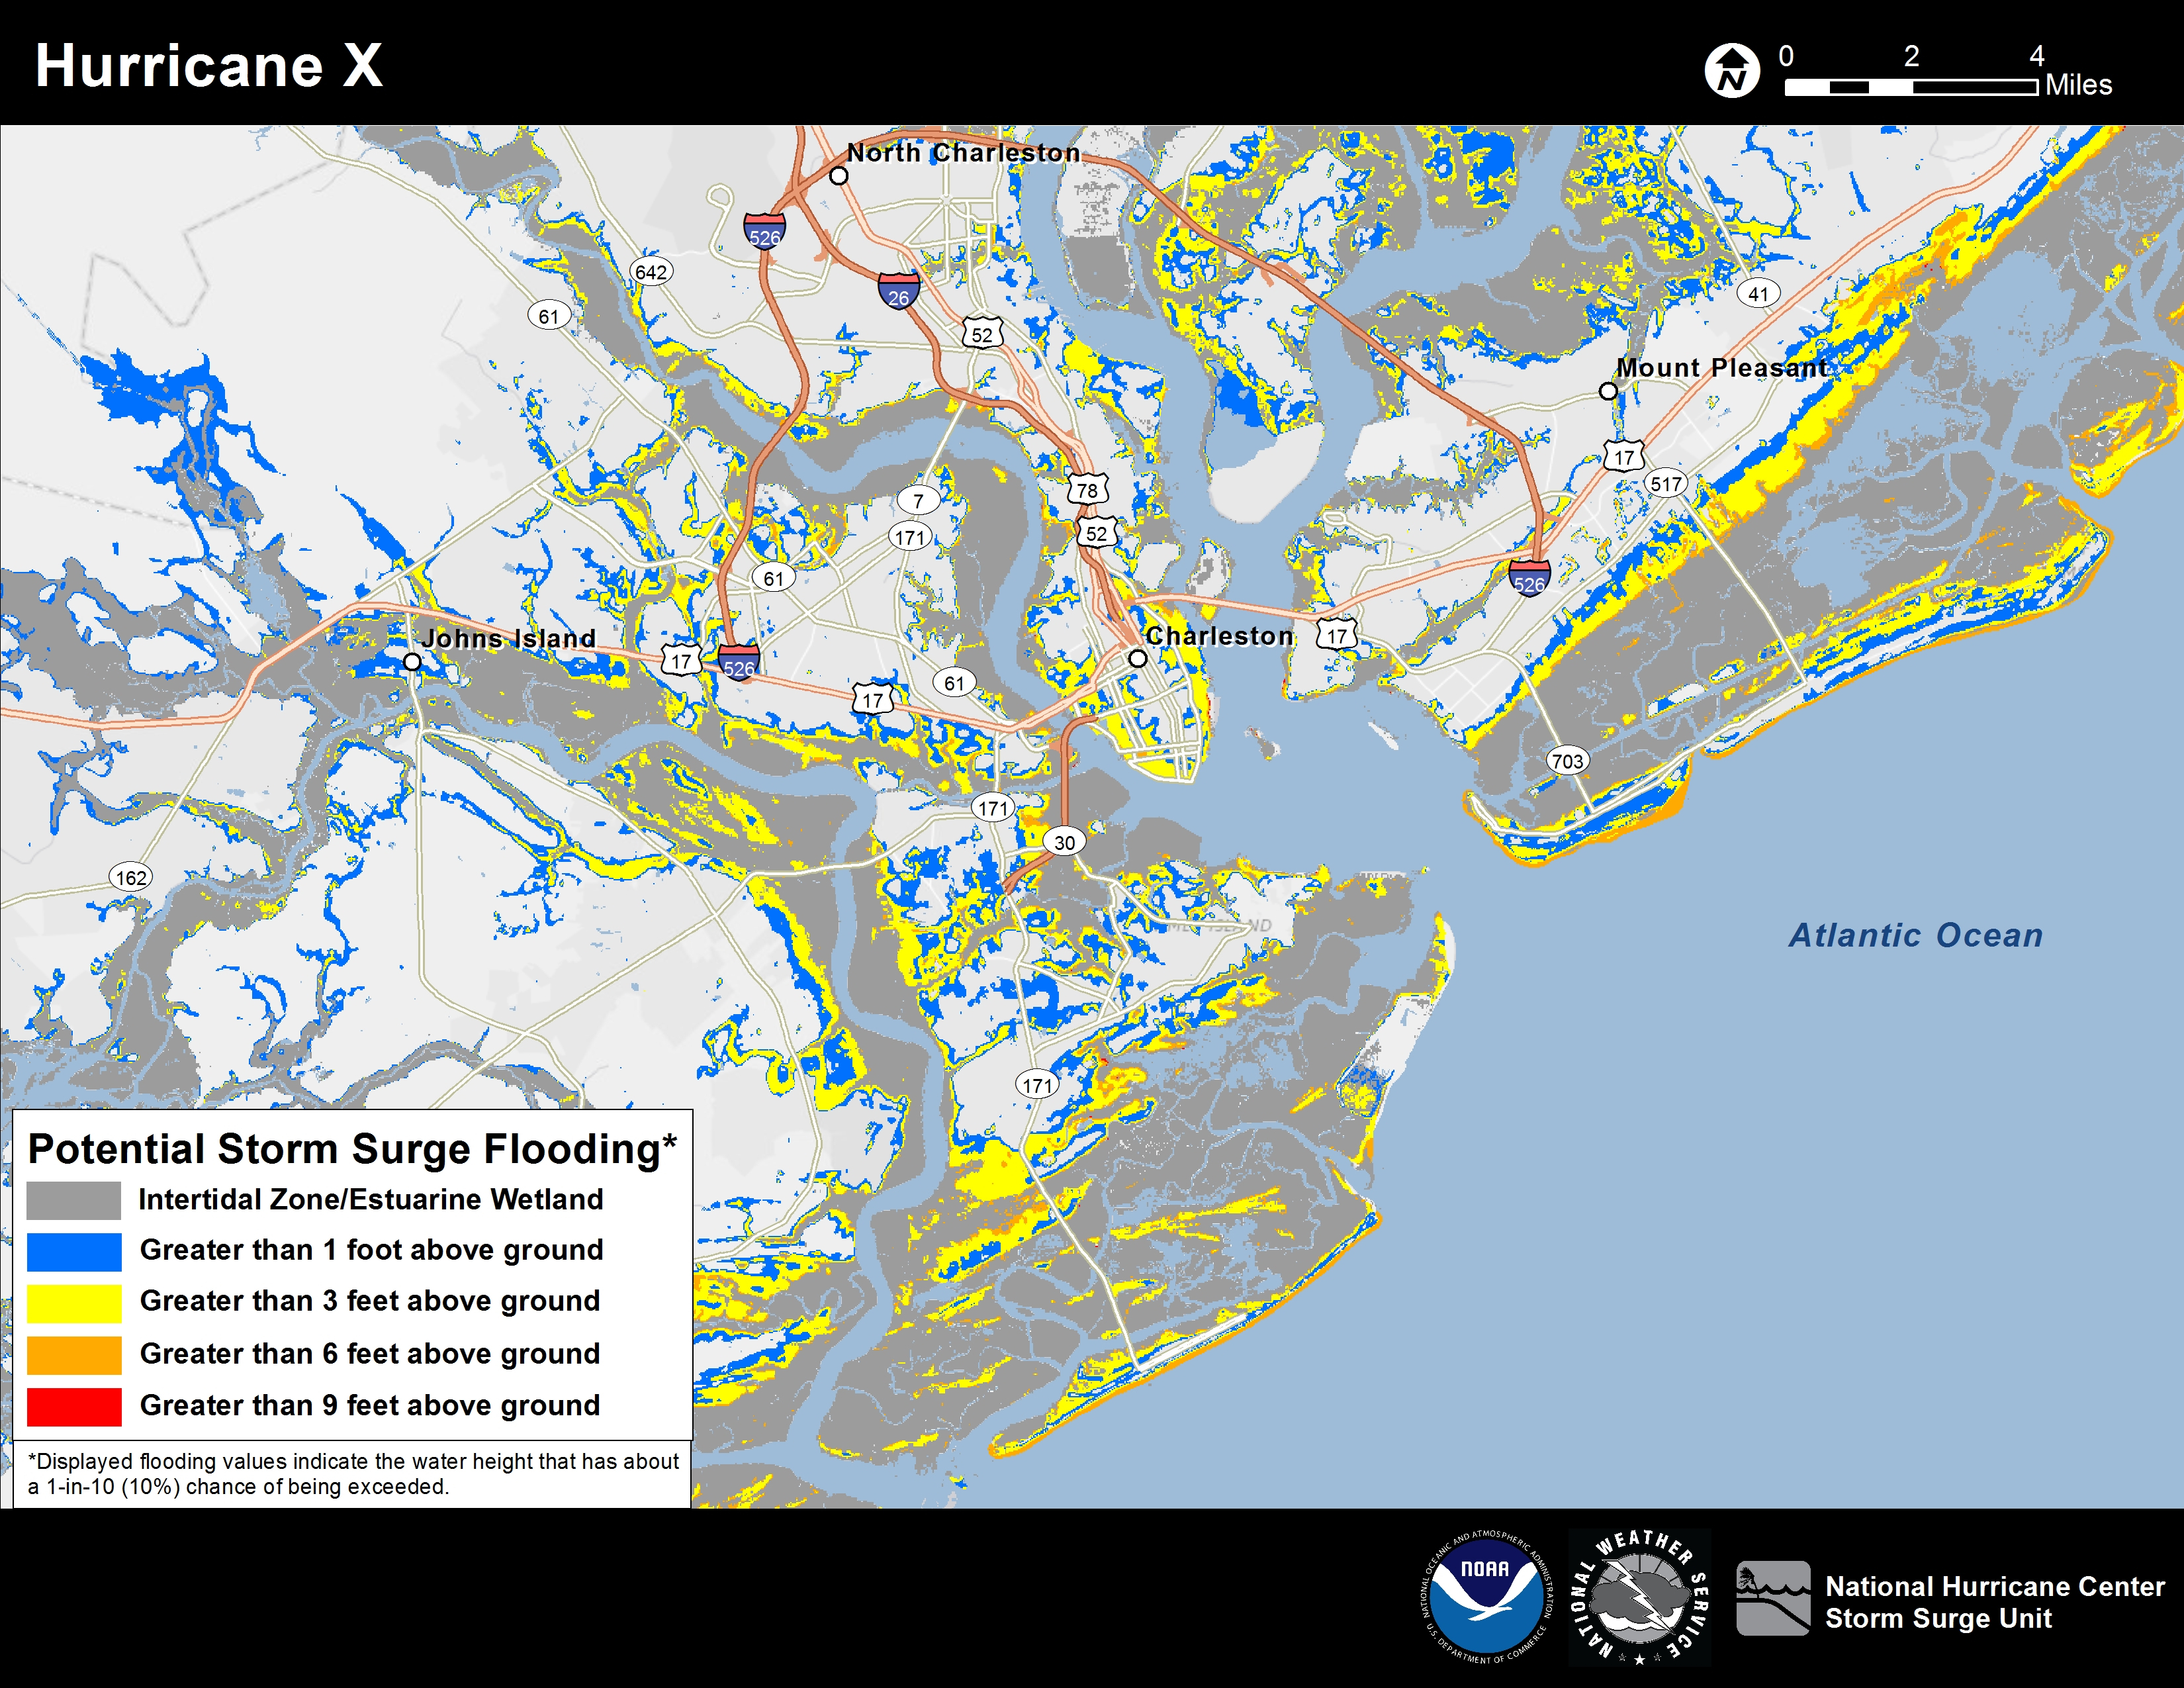 Potential Storm Surge Flooding Map - Naples Florida Flood Zone Map